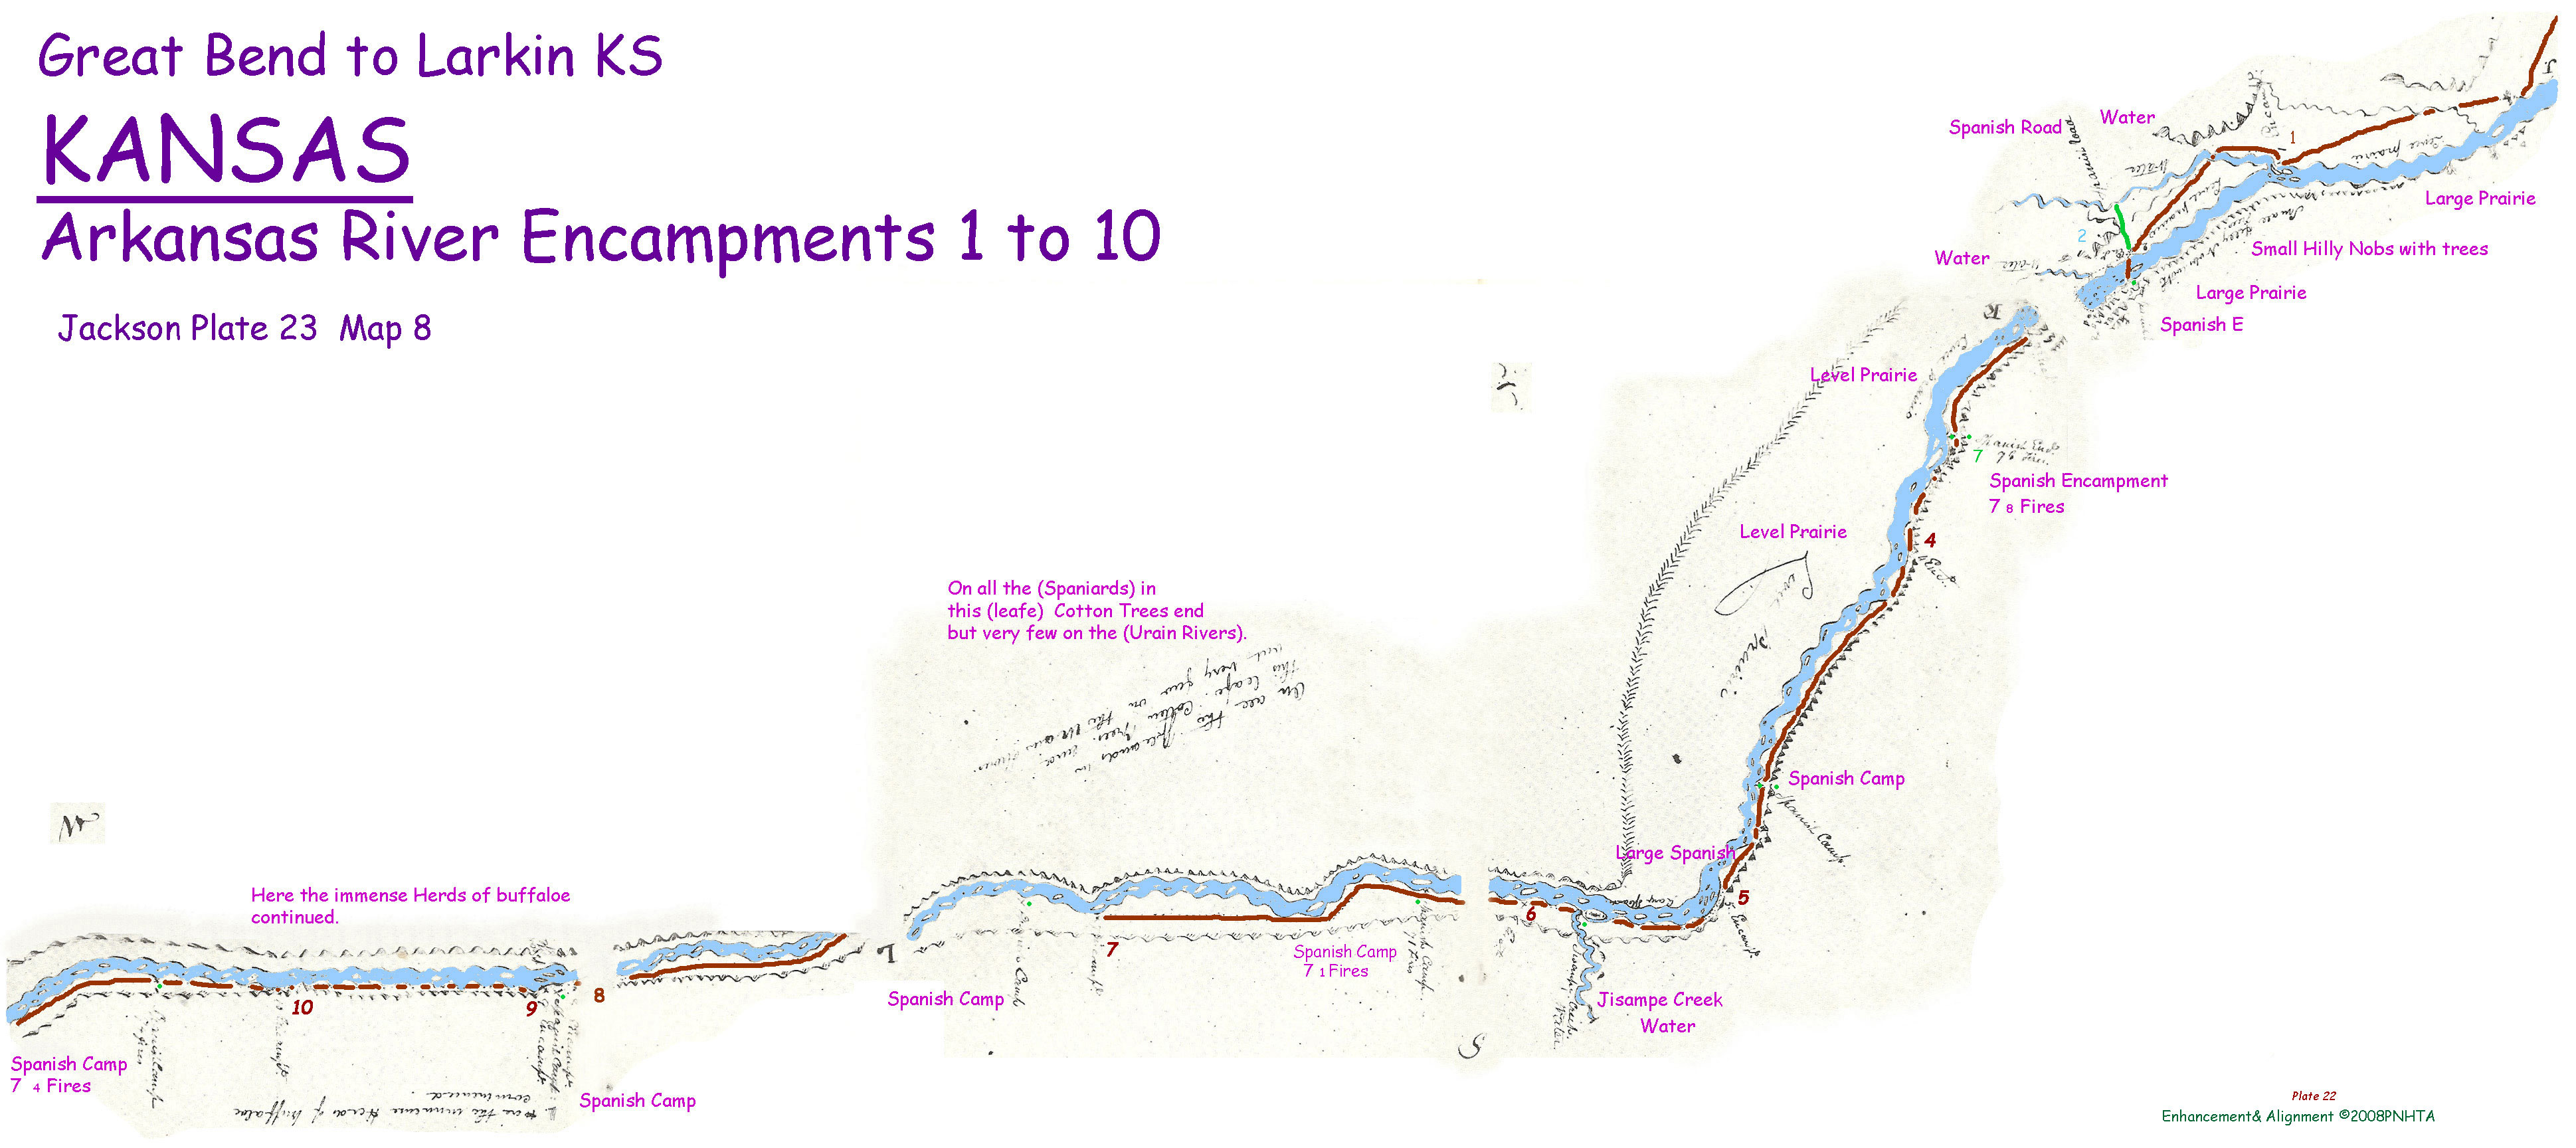 Map 8 (Field 23)- Great Bend to Larkin KS on the Arkansas River (Jackson Plate 23)